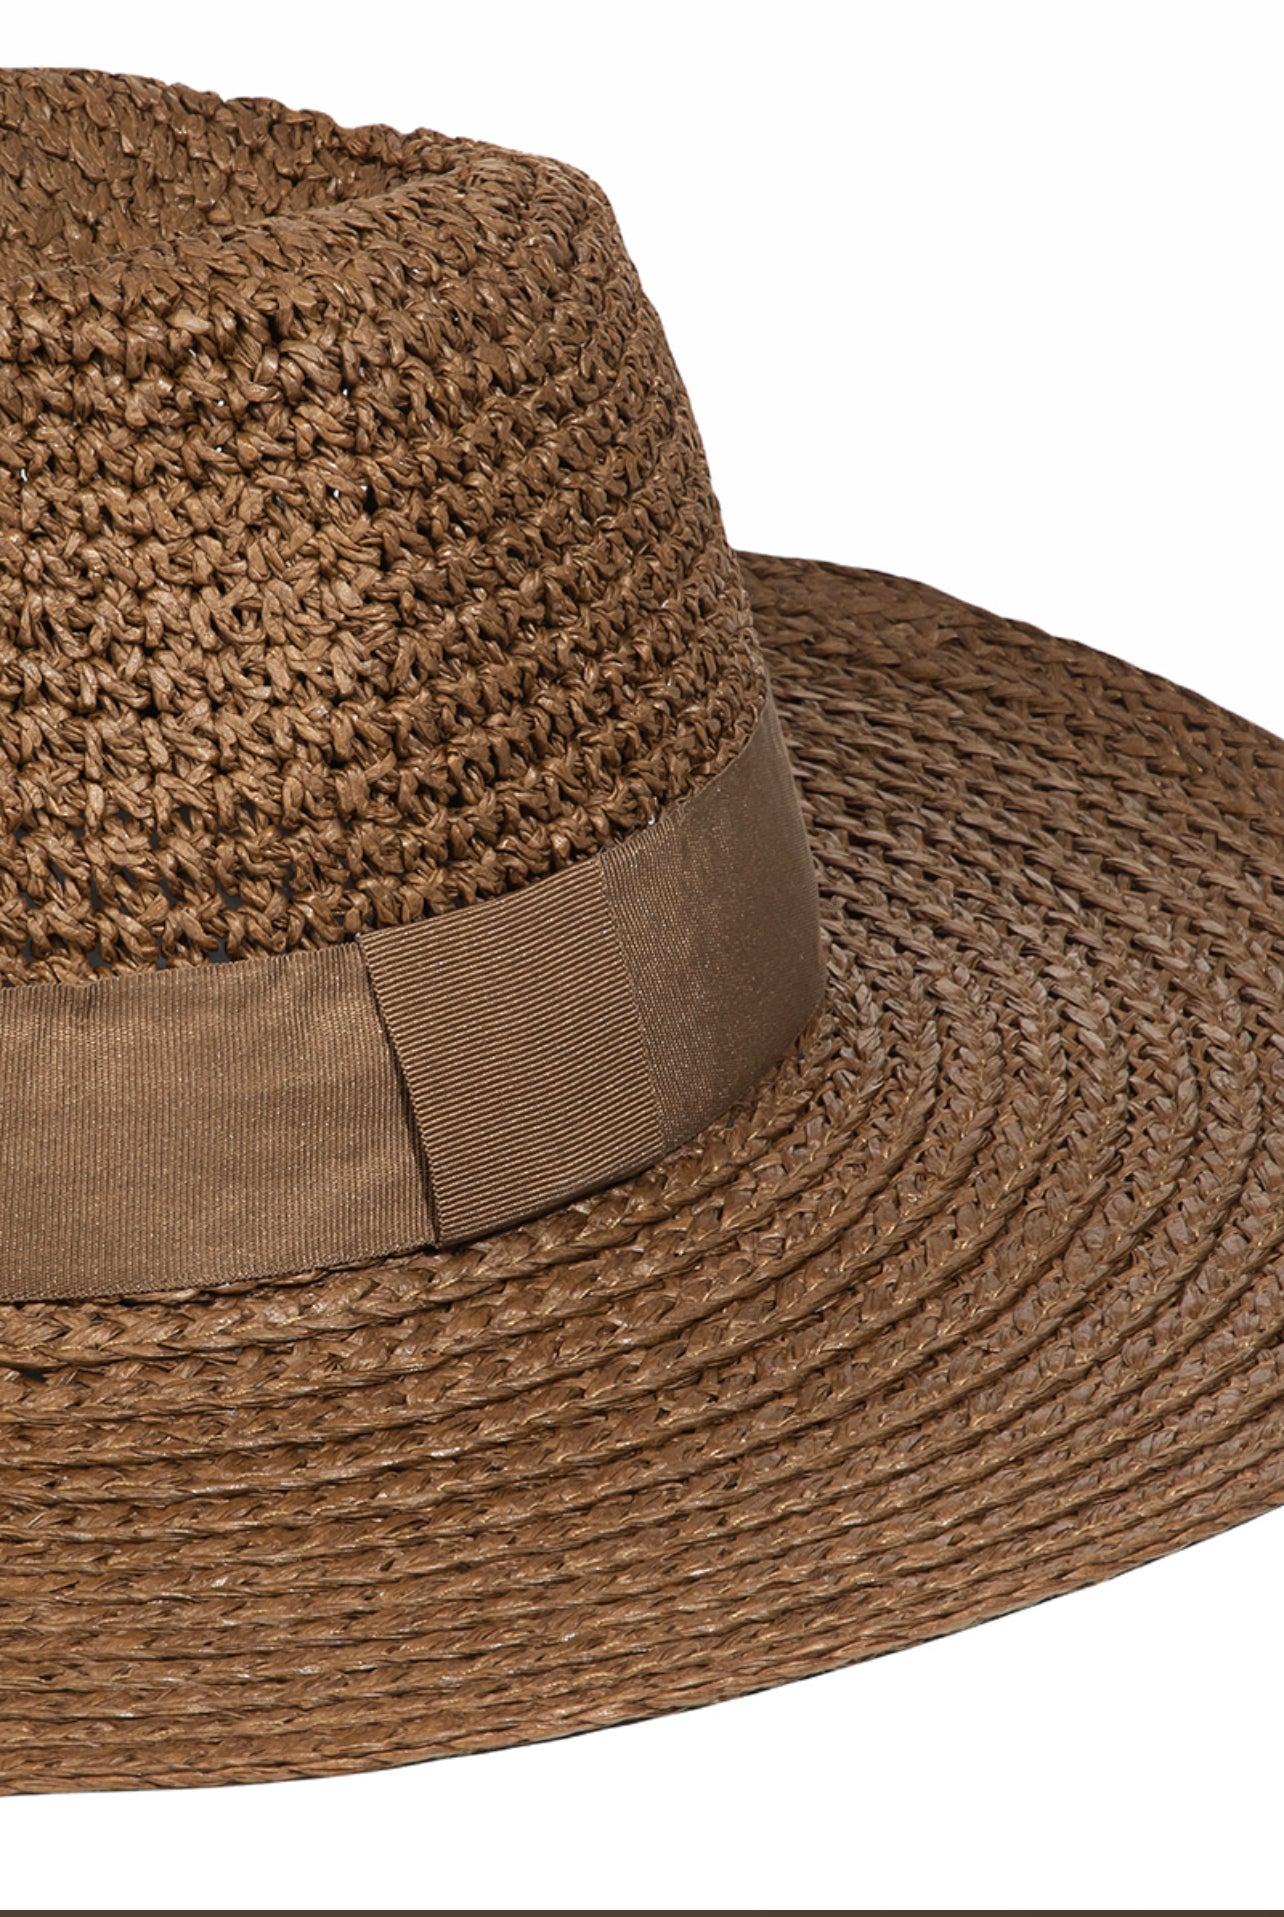 Monochrome Banded Straw Sun Hat